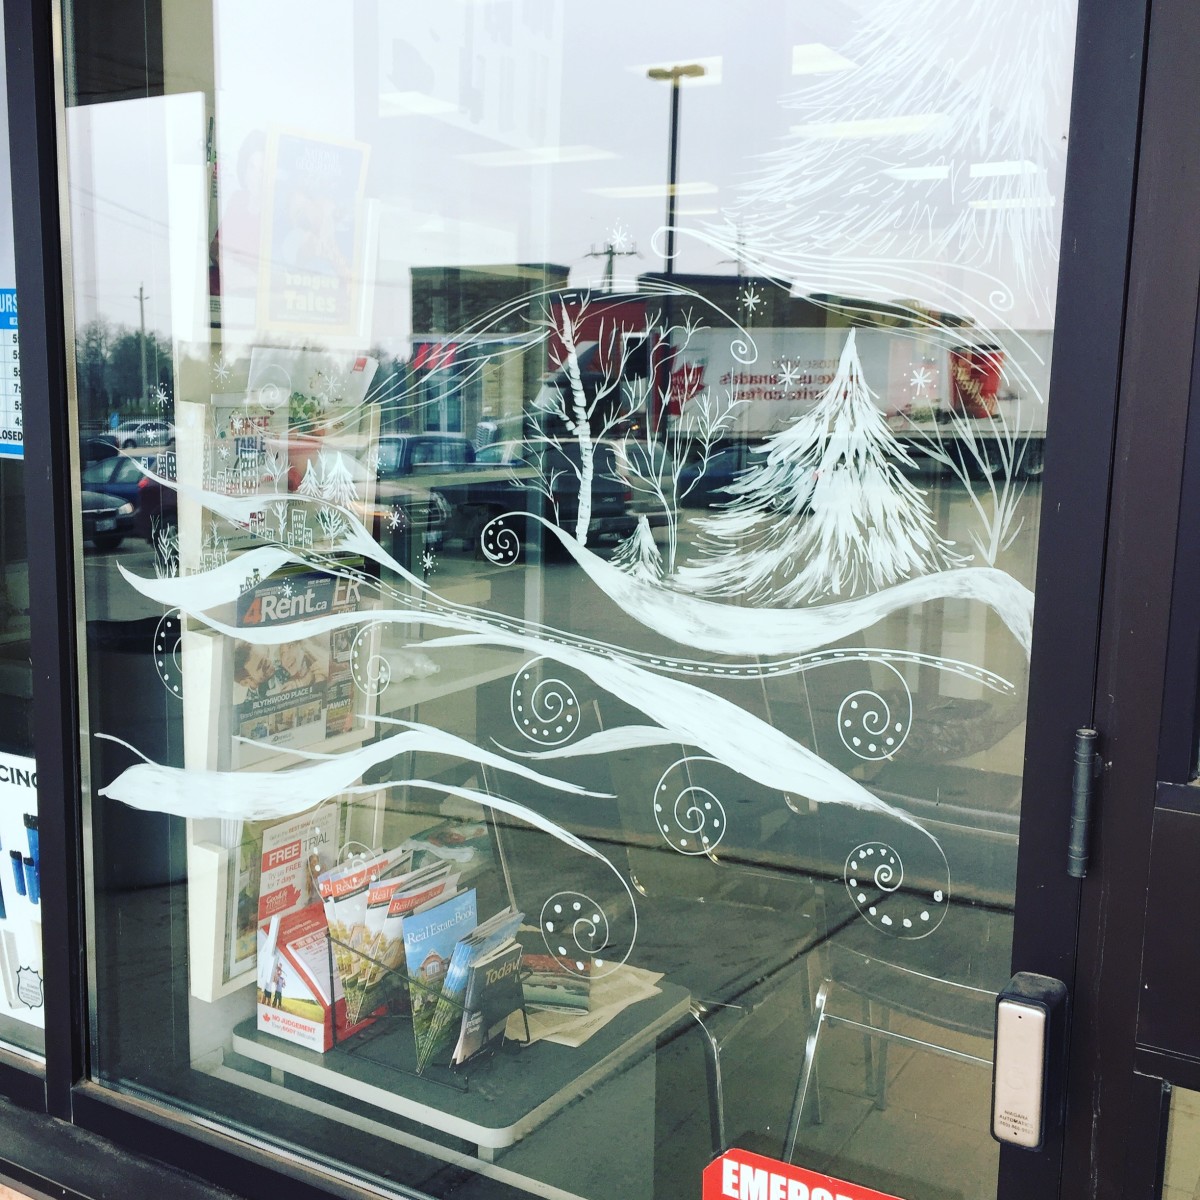 White window liquid chalk art design for a storefront